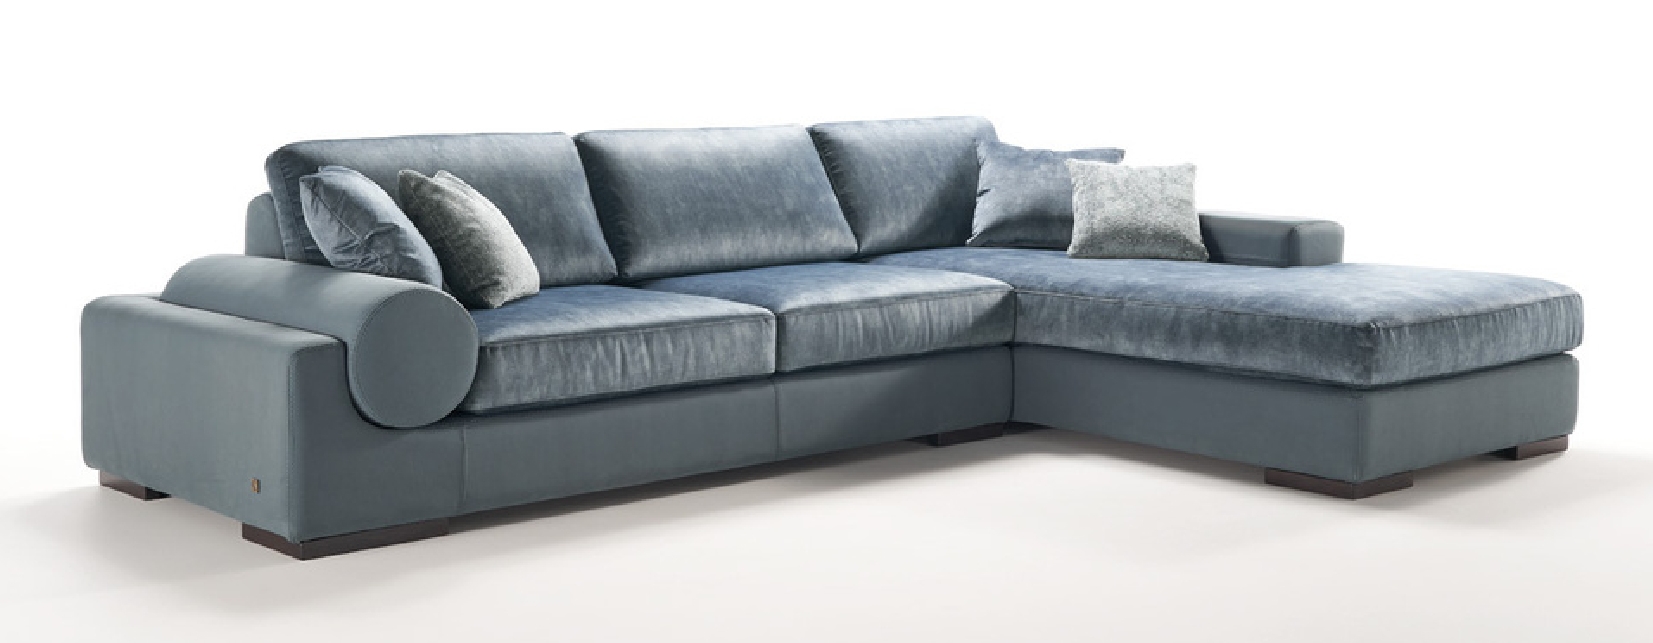 Ref Modern corner luxury sofa